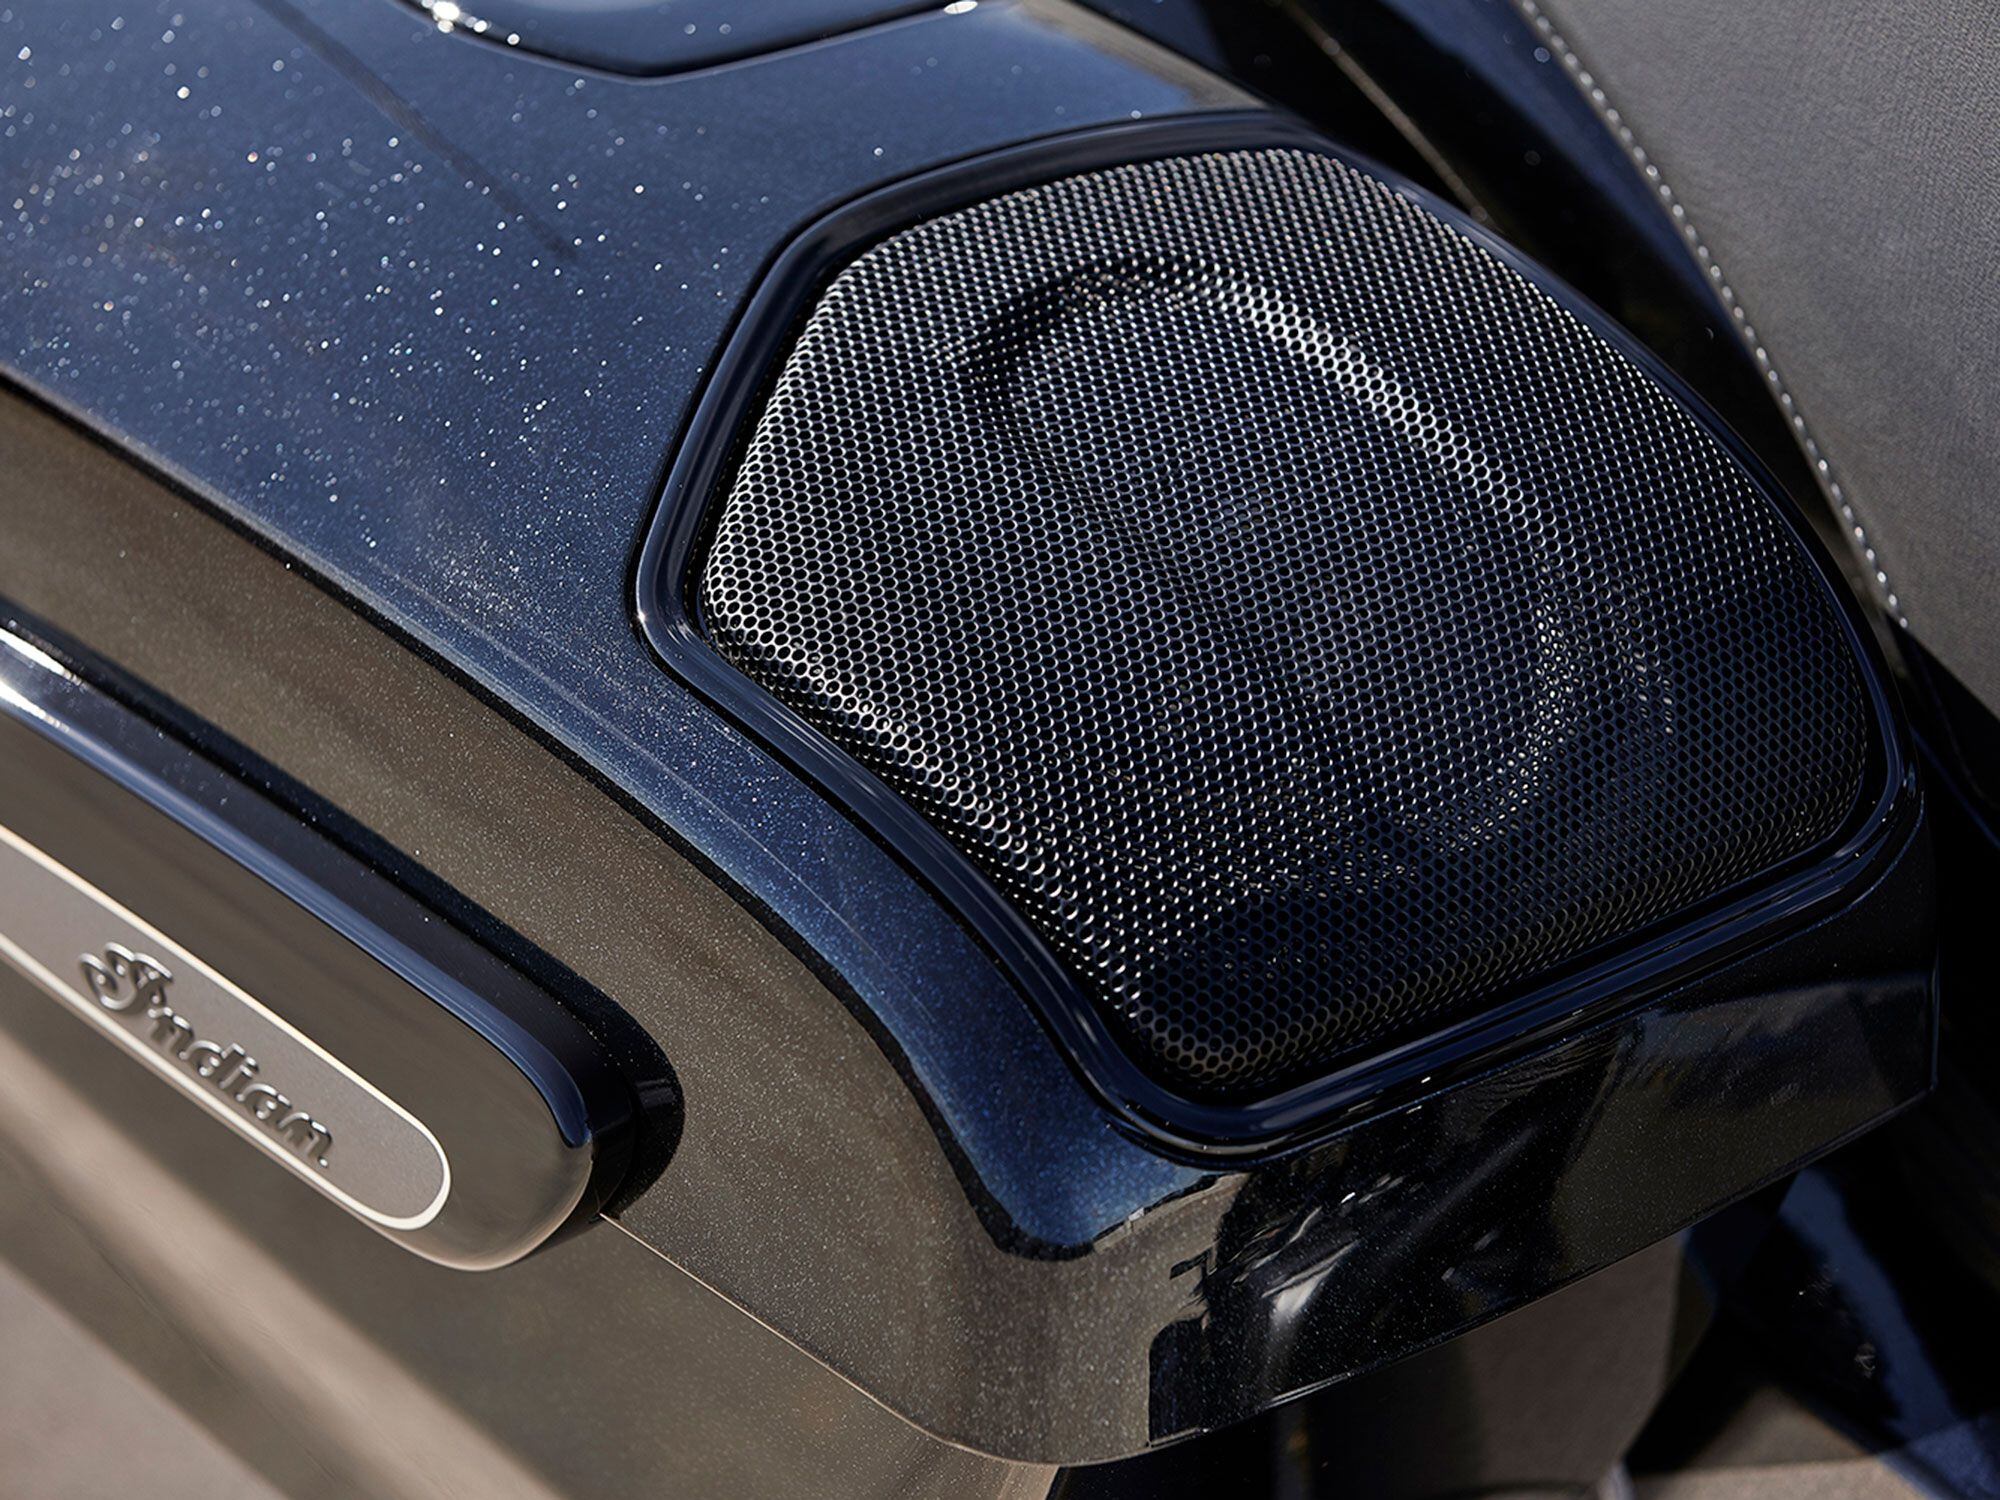 Ride Command powers a 400-watt stereo featuring Apple CarPlay.